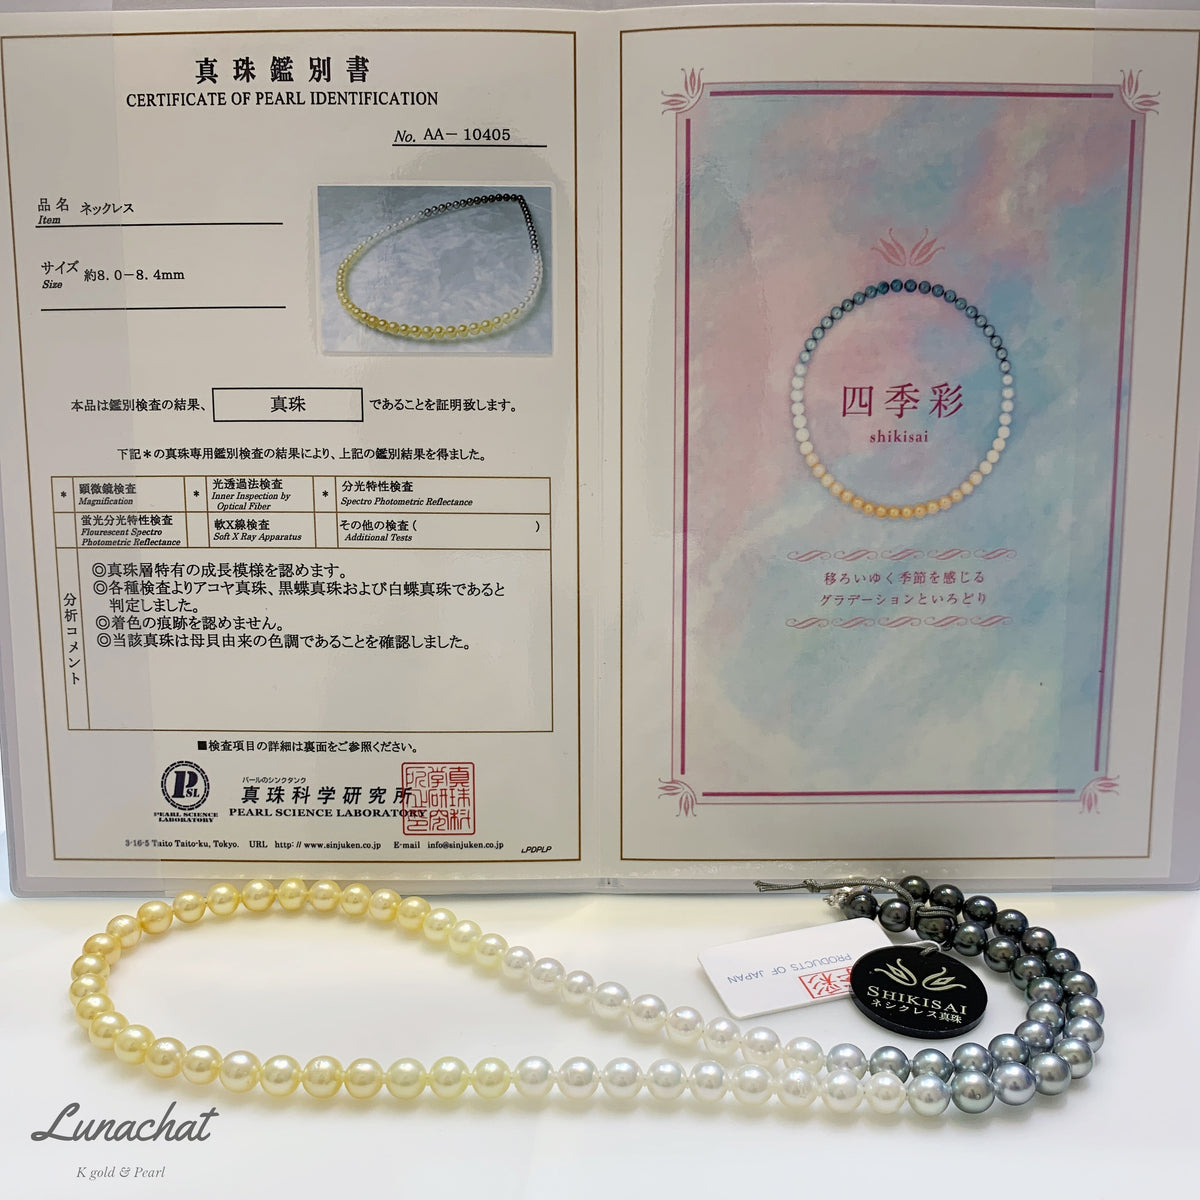 Lunachat 18K GOLD 蝴蝶結扣8-8.4mm 日本四季彩珍珠頸鍊(附證書 